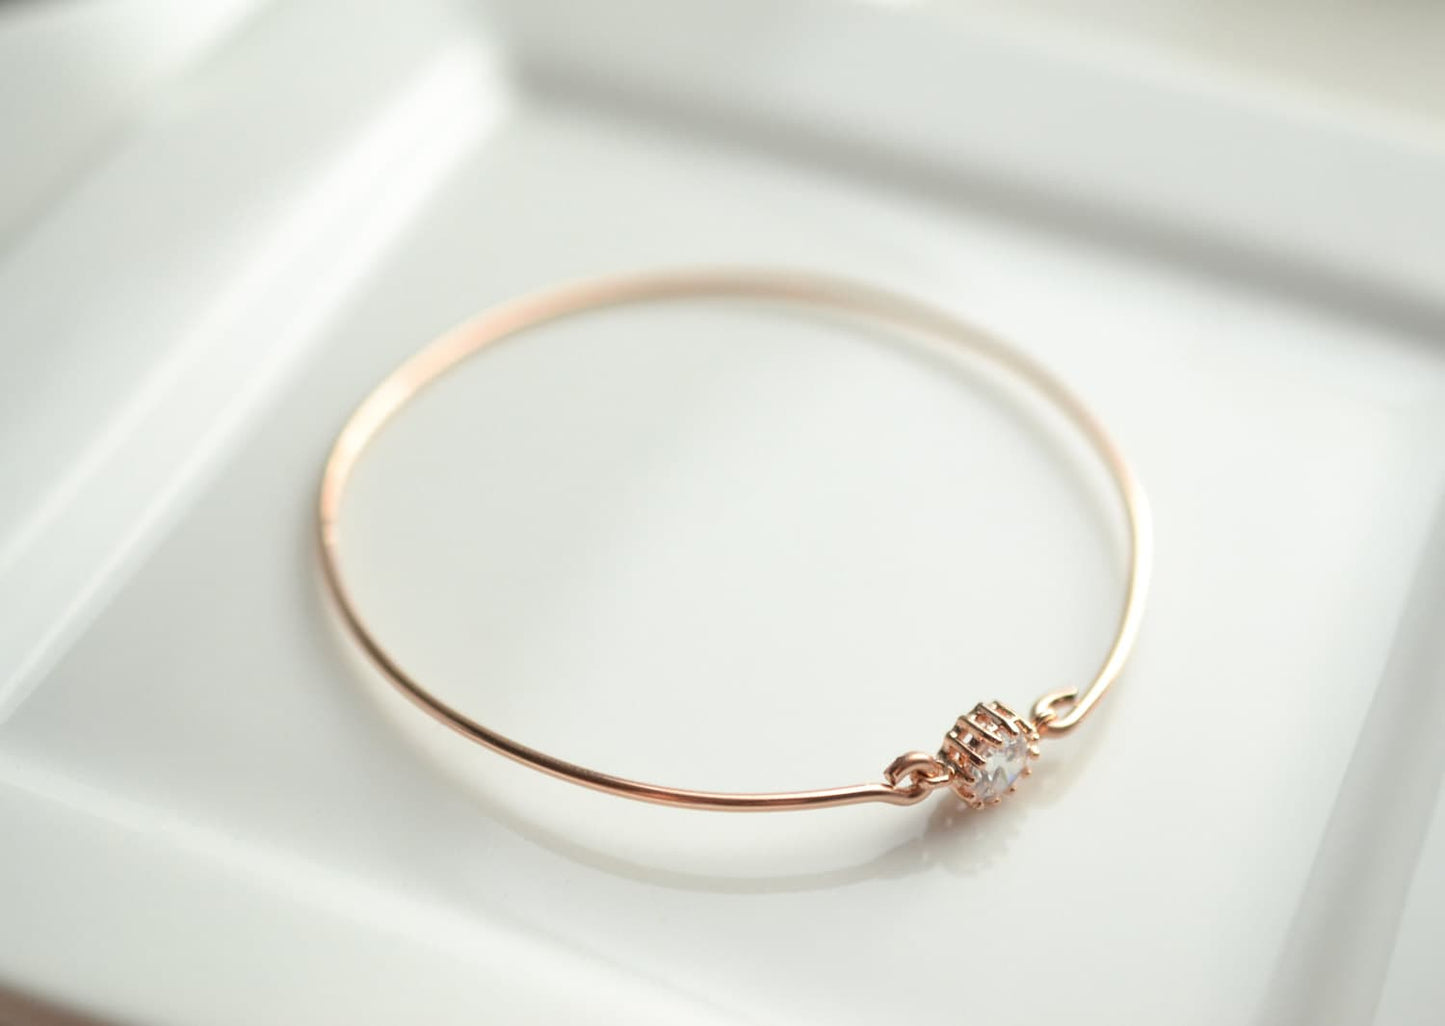 Rose Gold Bangle Bracelet with Cubic Zirconia // 14k Rose Gold Filled Bangle // BridesMaid Gift // Gemstone Bangle // Gemstone Bracelet